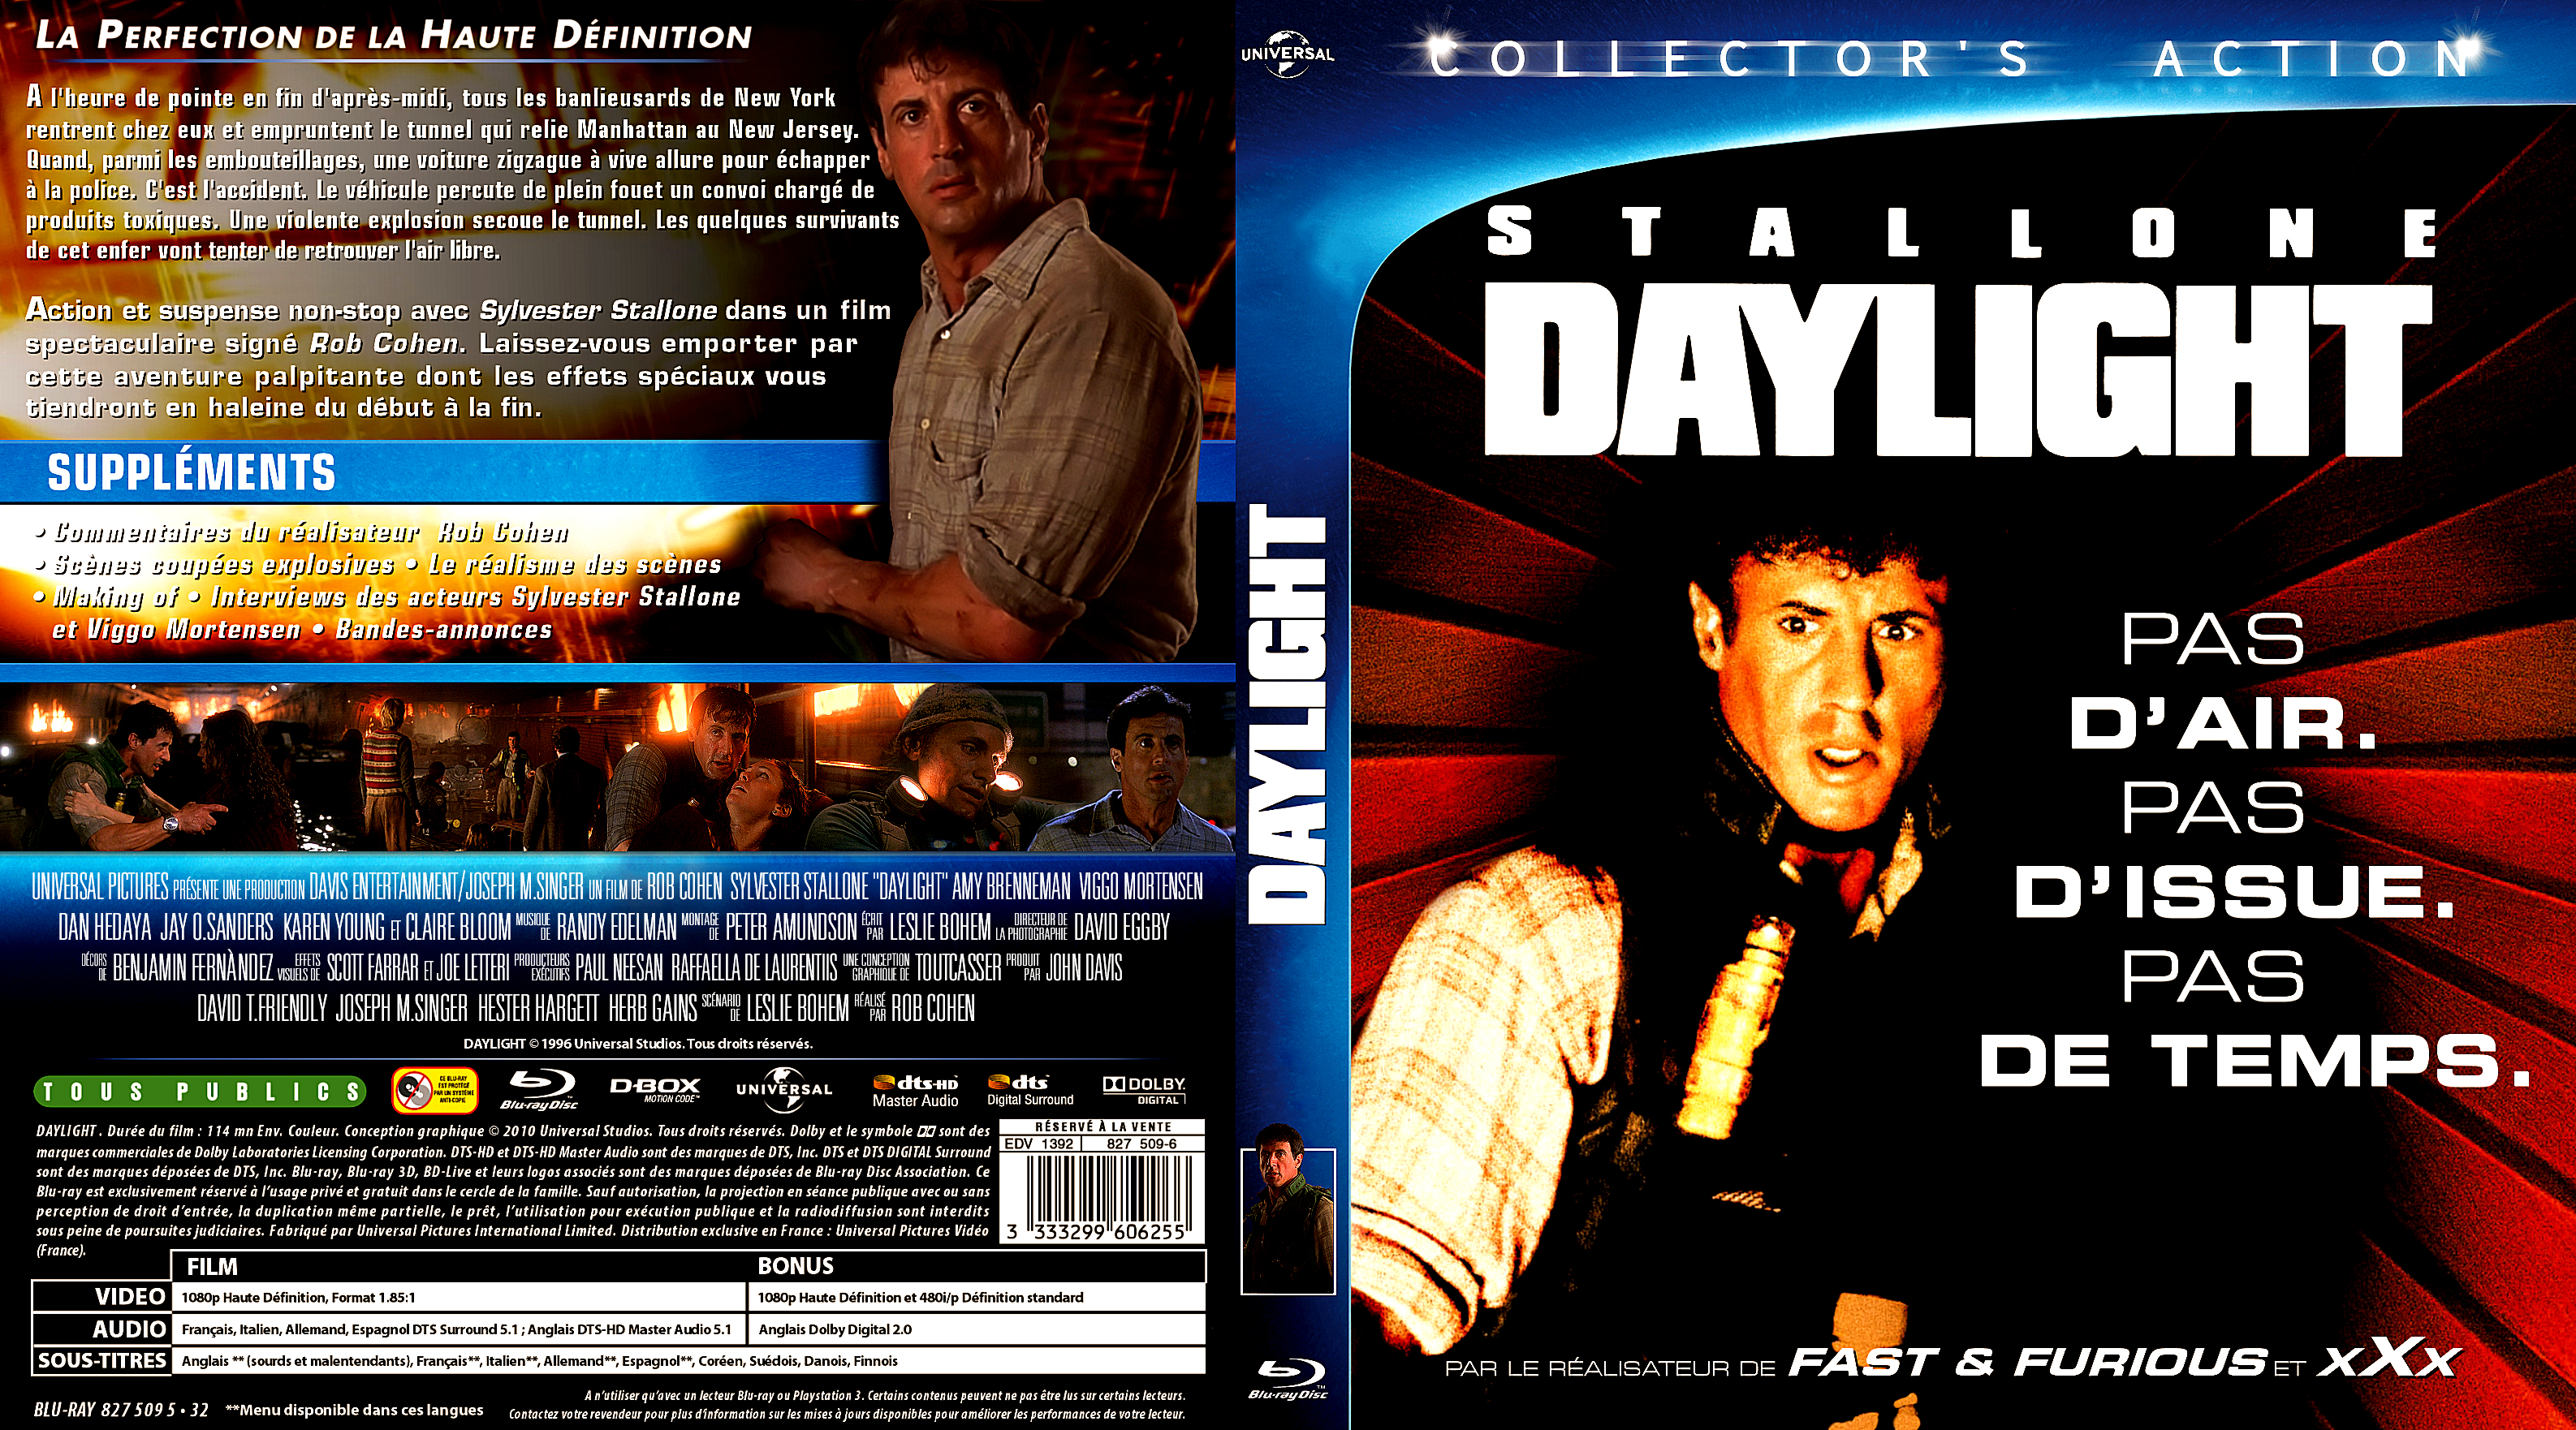 Jaquette DVD Daylight custom (BLU-RAY)